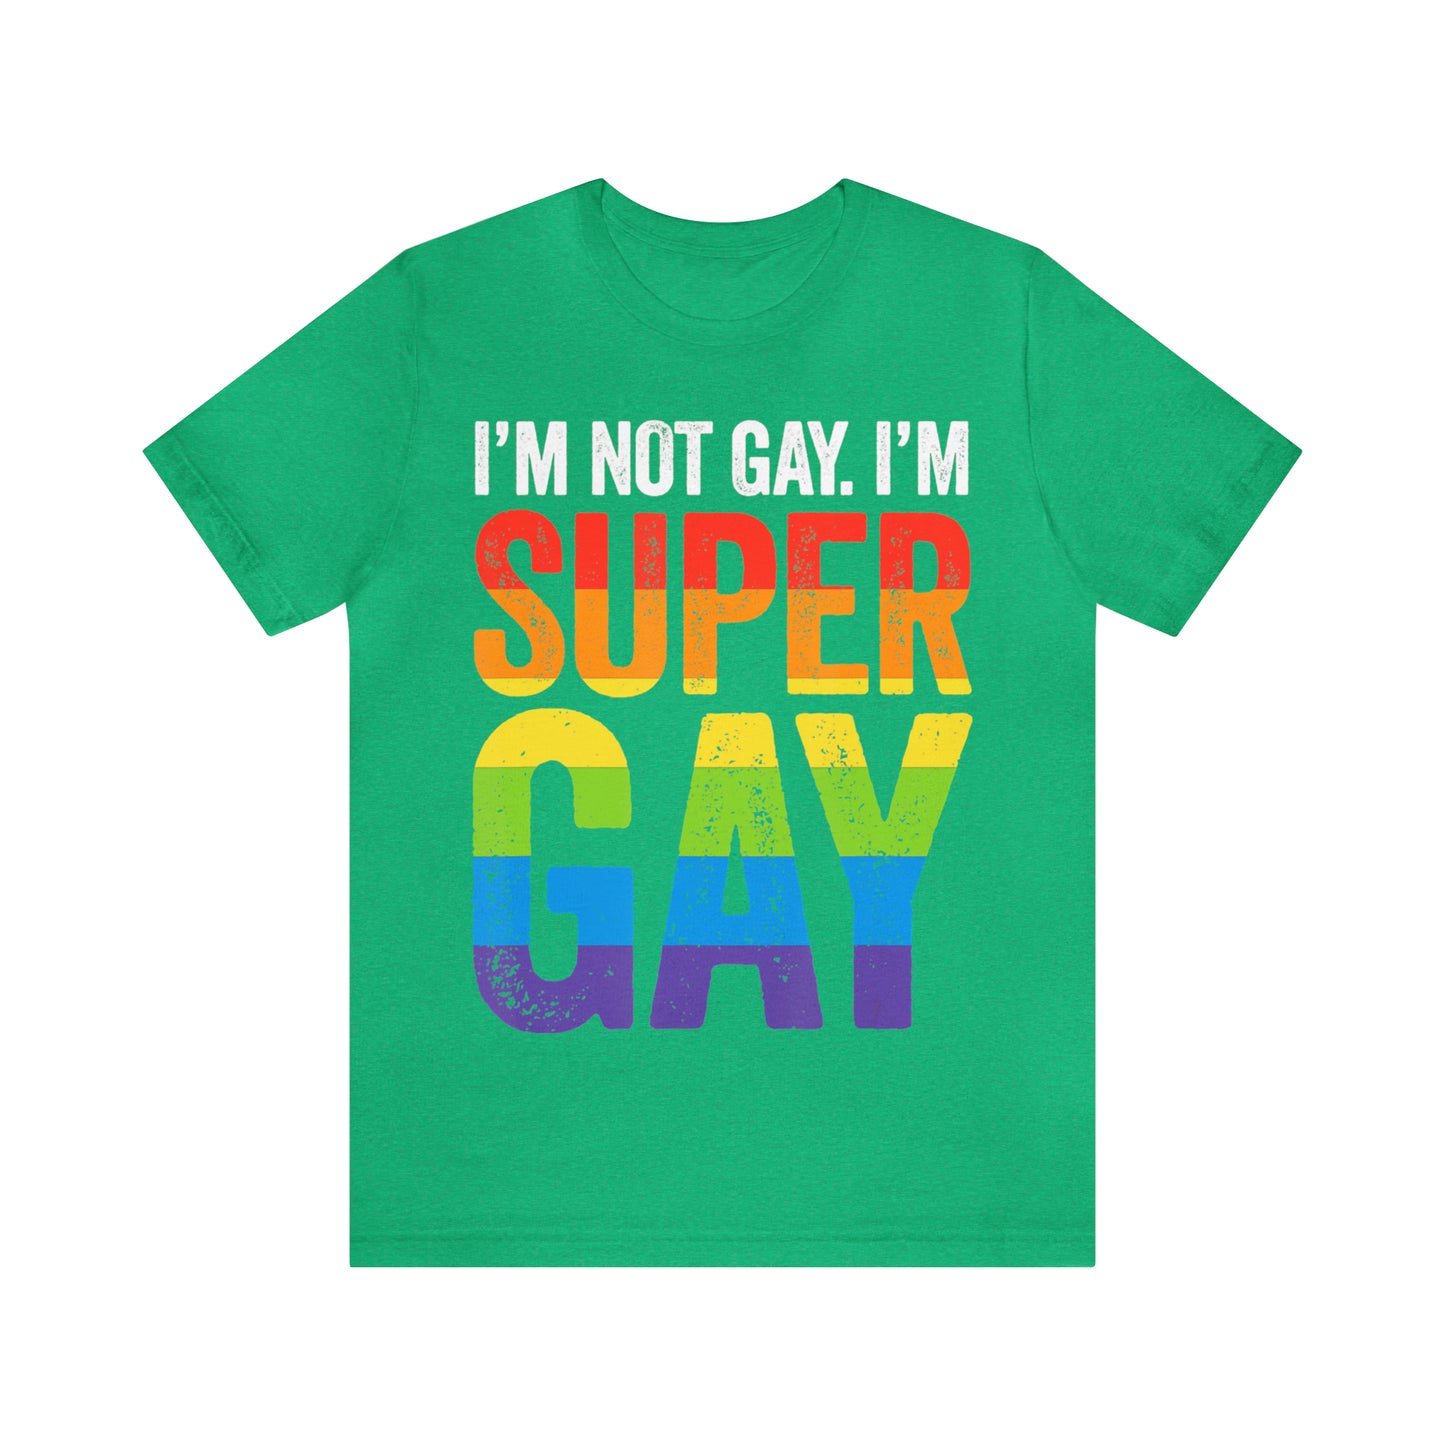 I'm Not Gay I'm Super Gay 3 - Unisex T-Shirt